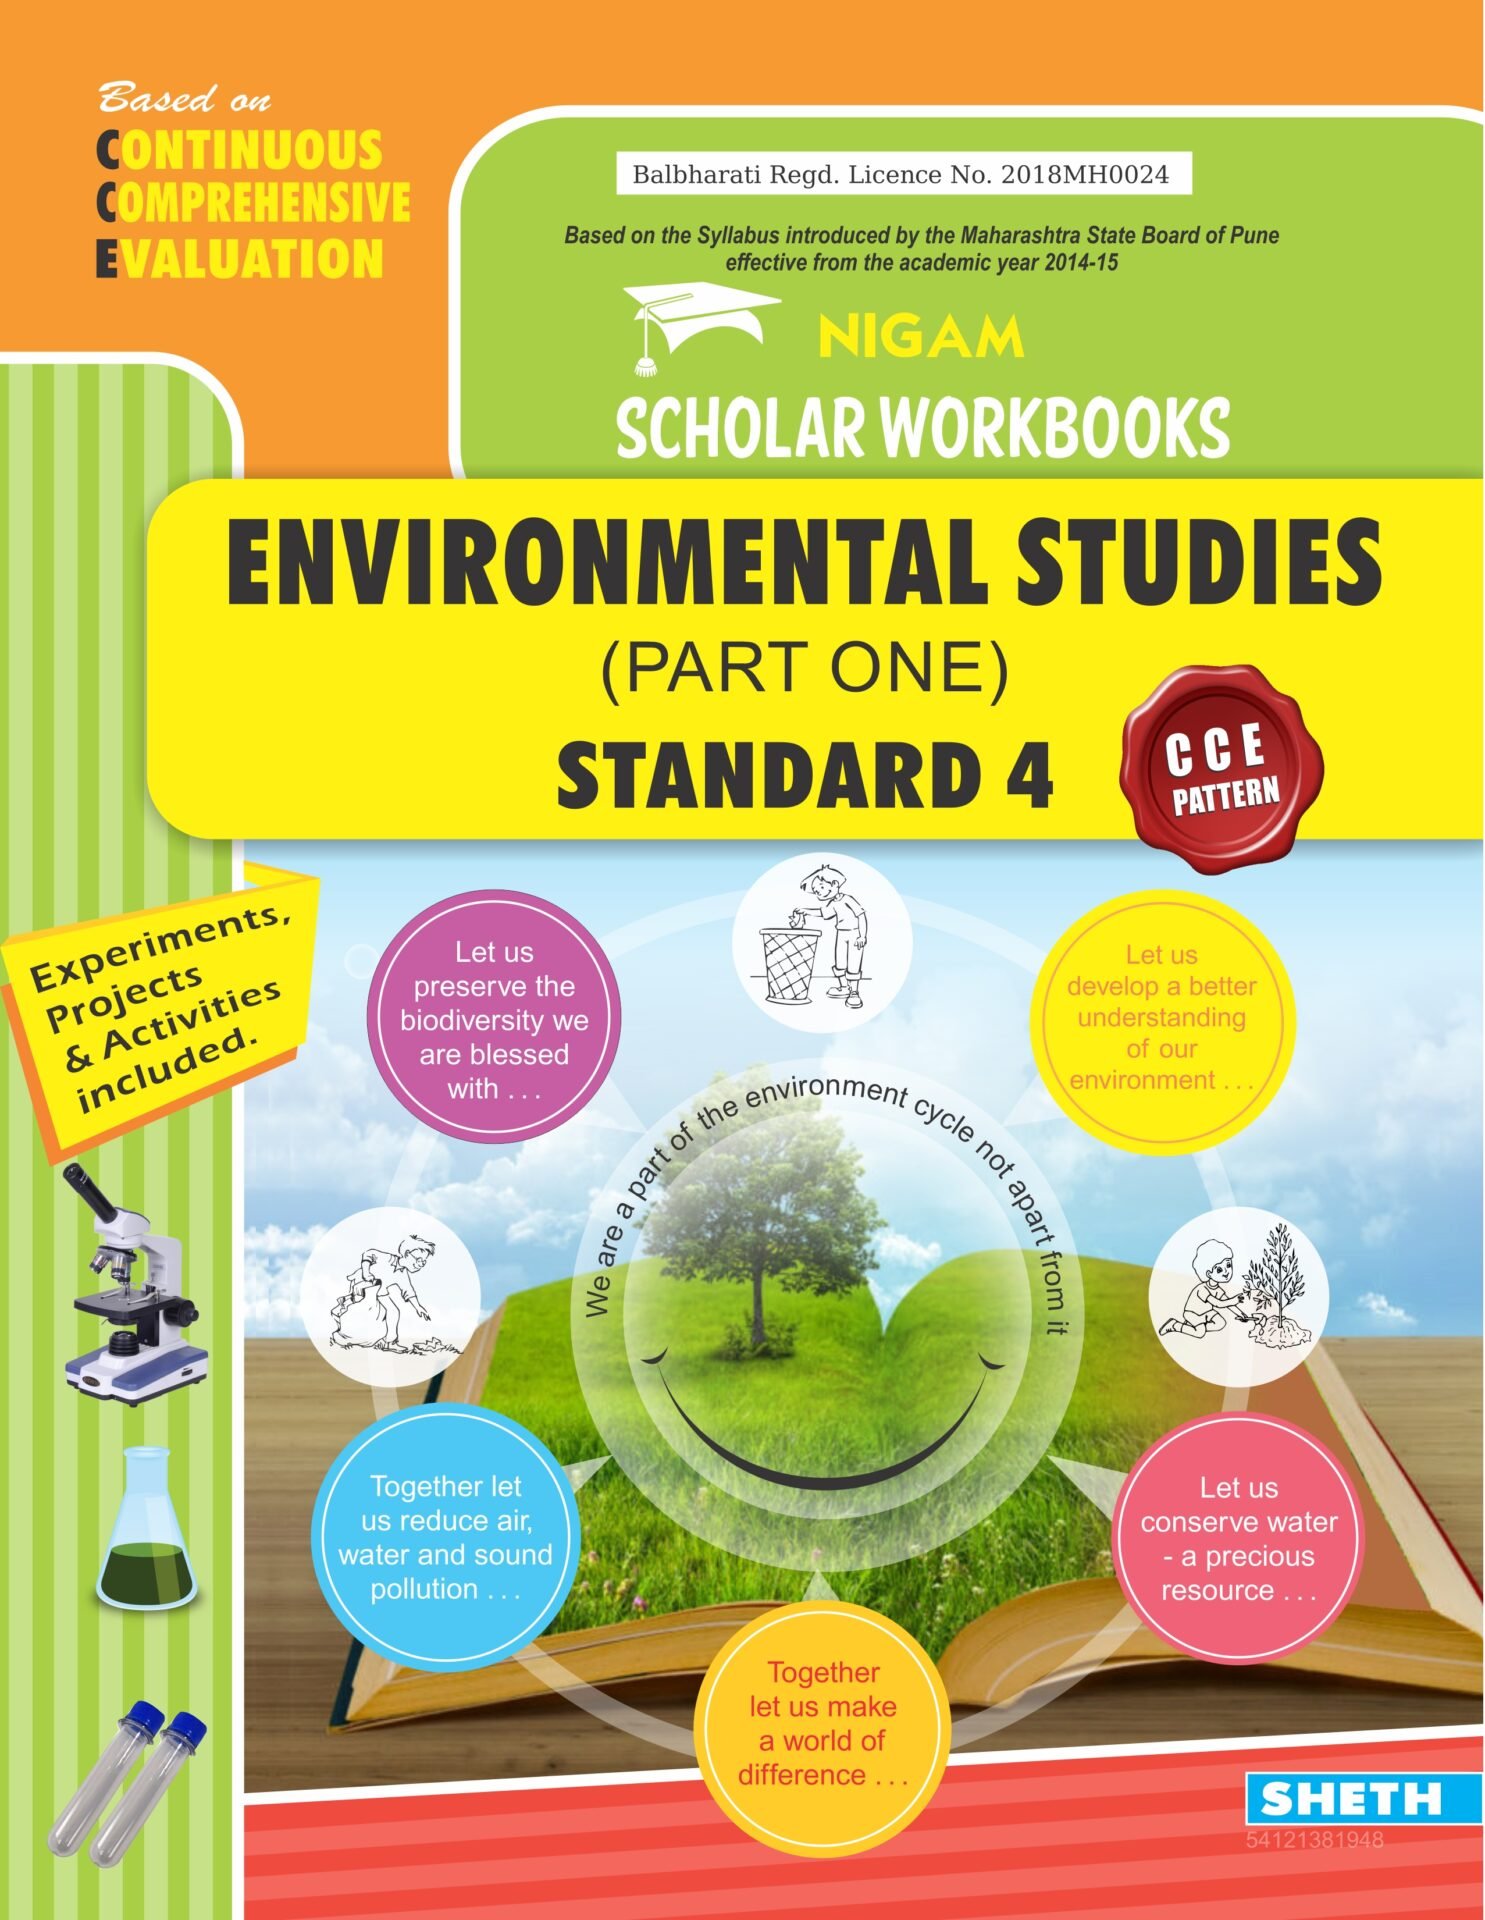 CCE Pattern Nigam Scholar Workbooks Environmental Studies Part 1 Standard 4 1